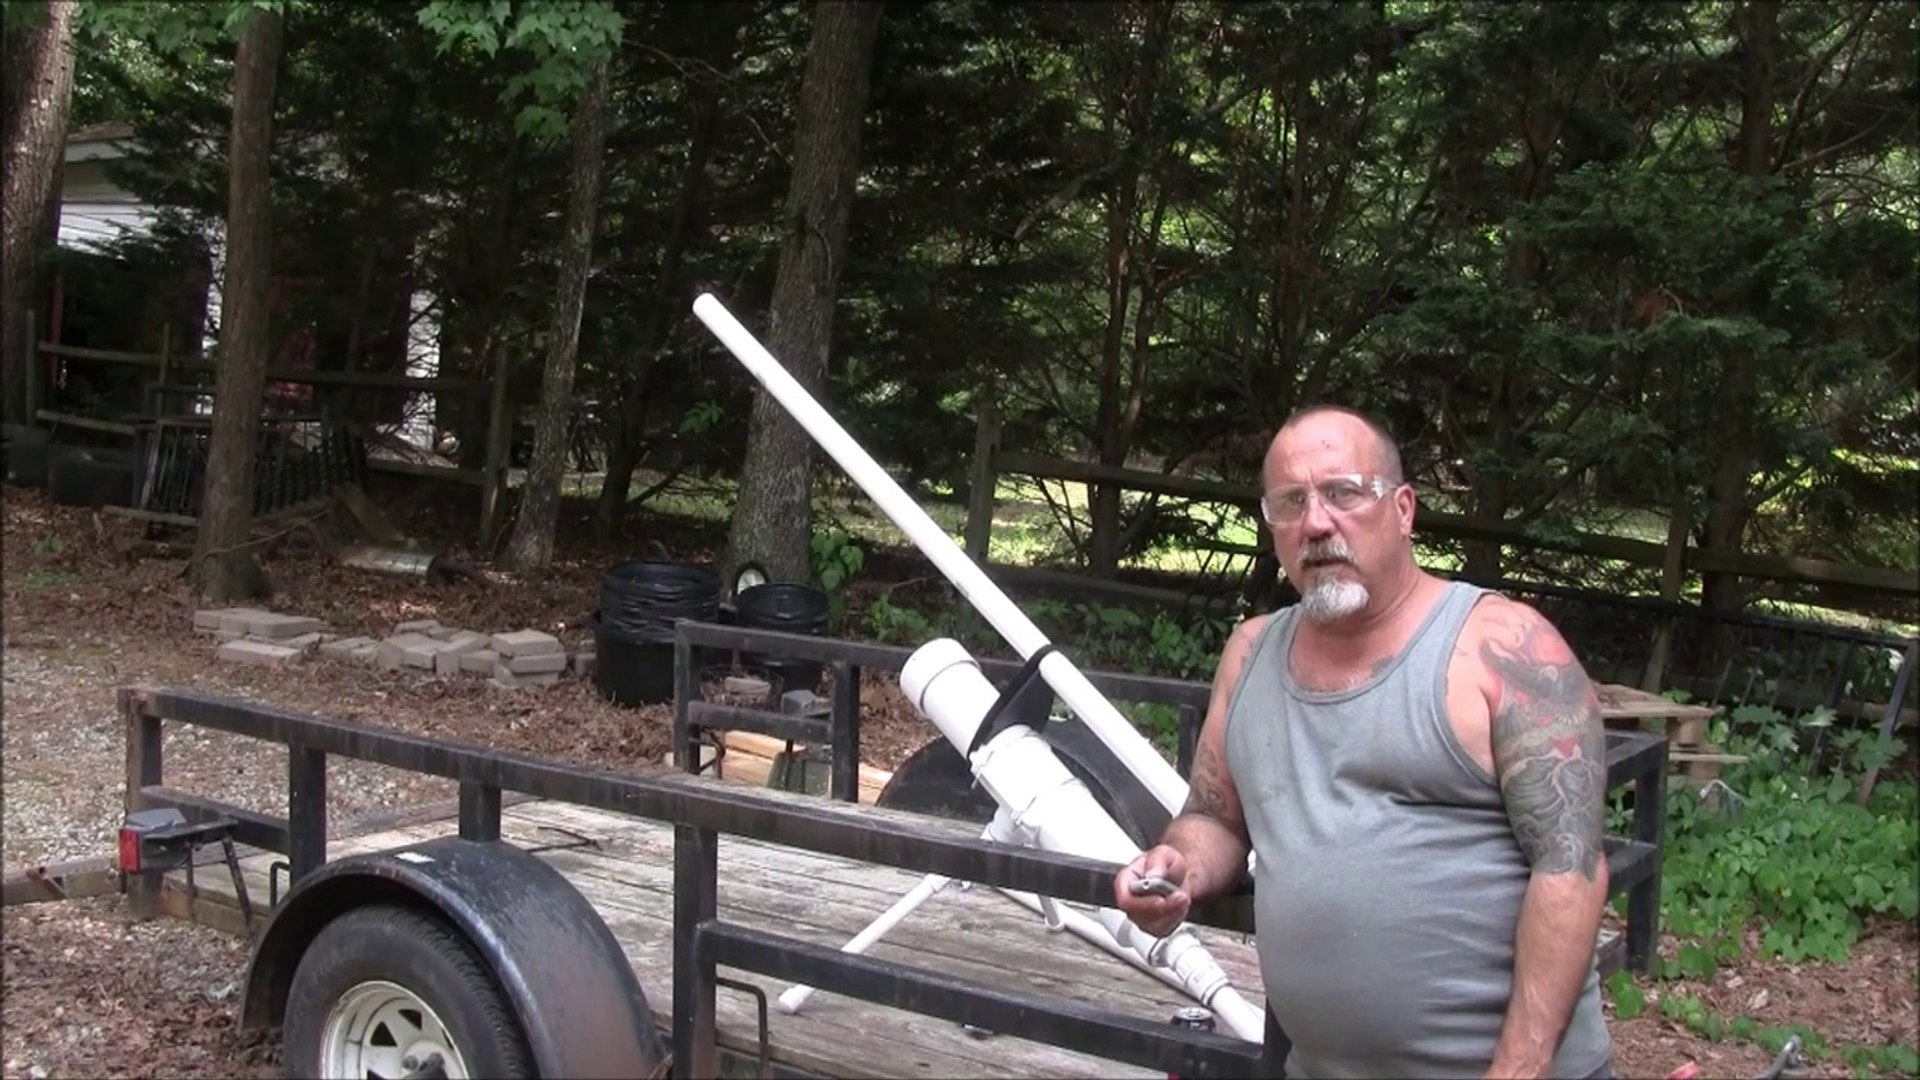 How to Build an Air Power Fish Bait Launcher, Spud Gun - DIY Surf